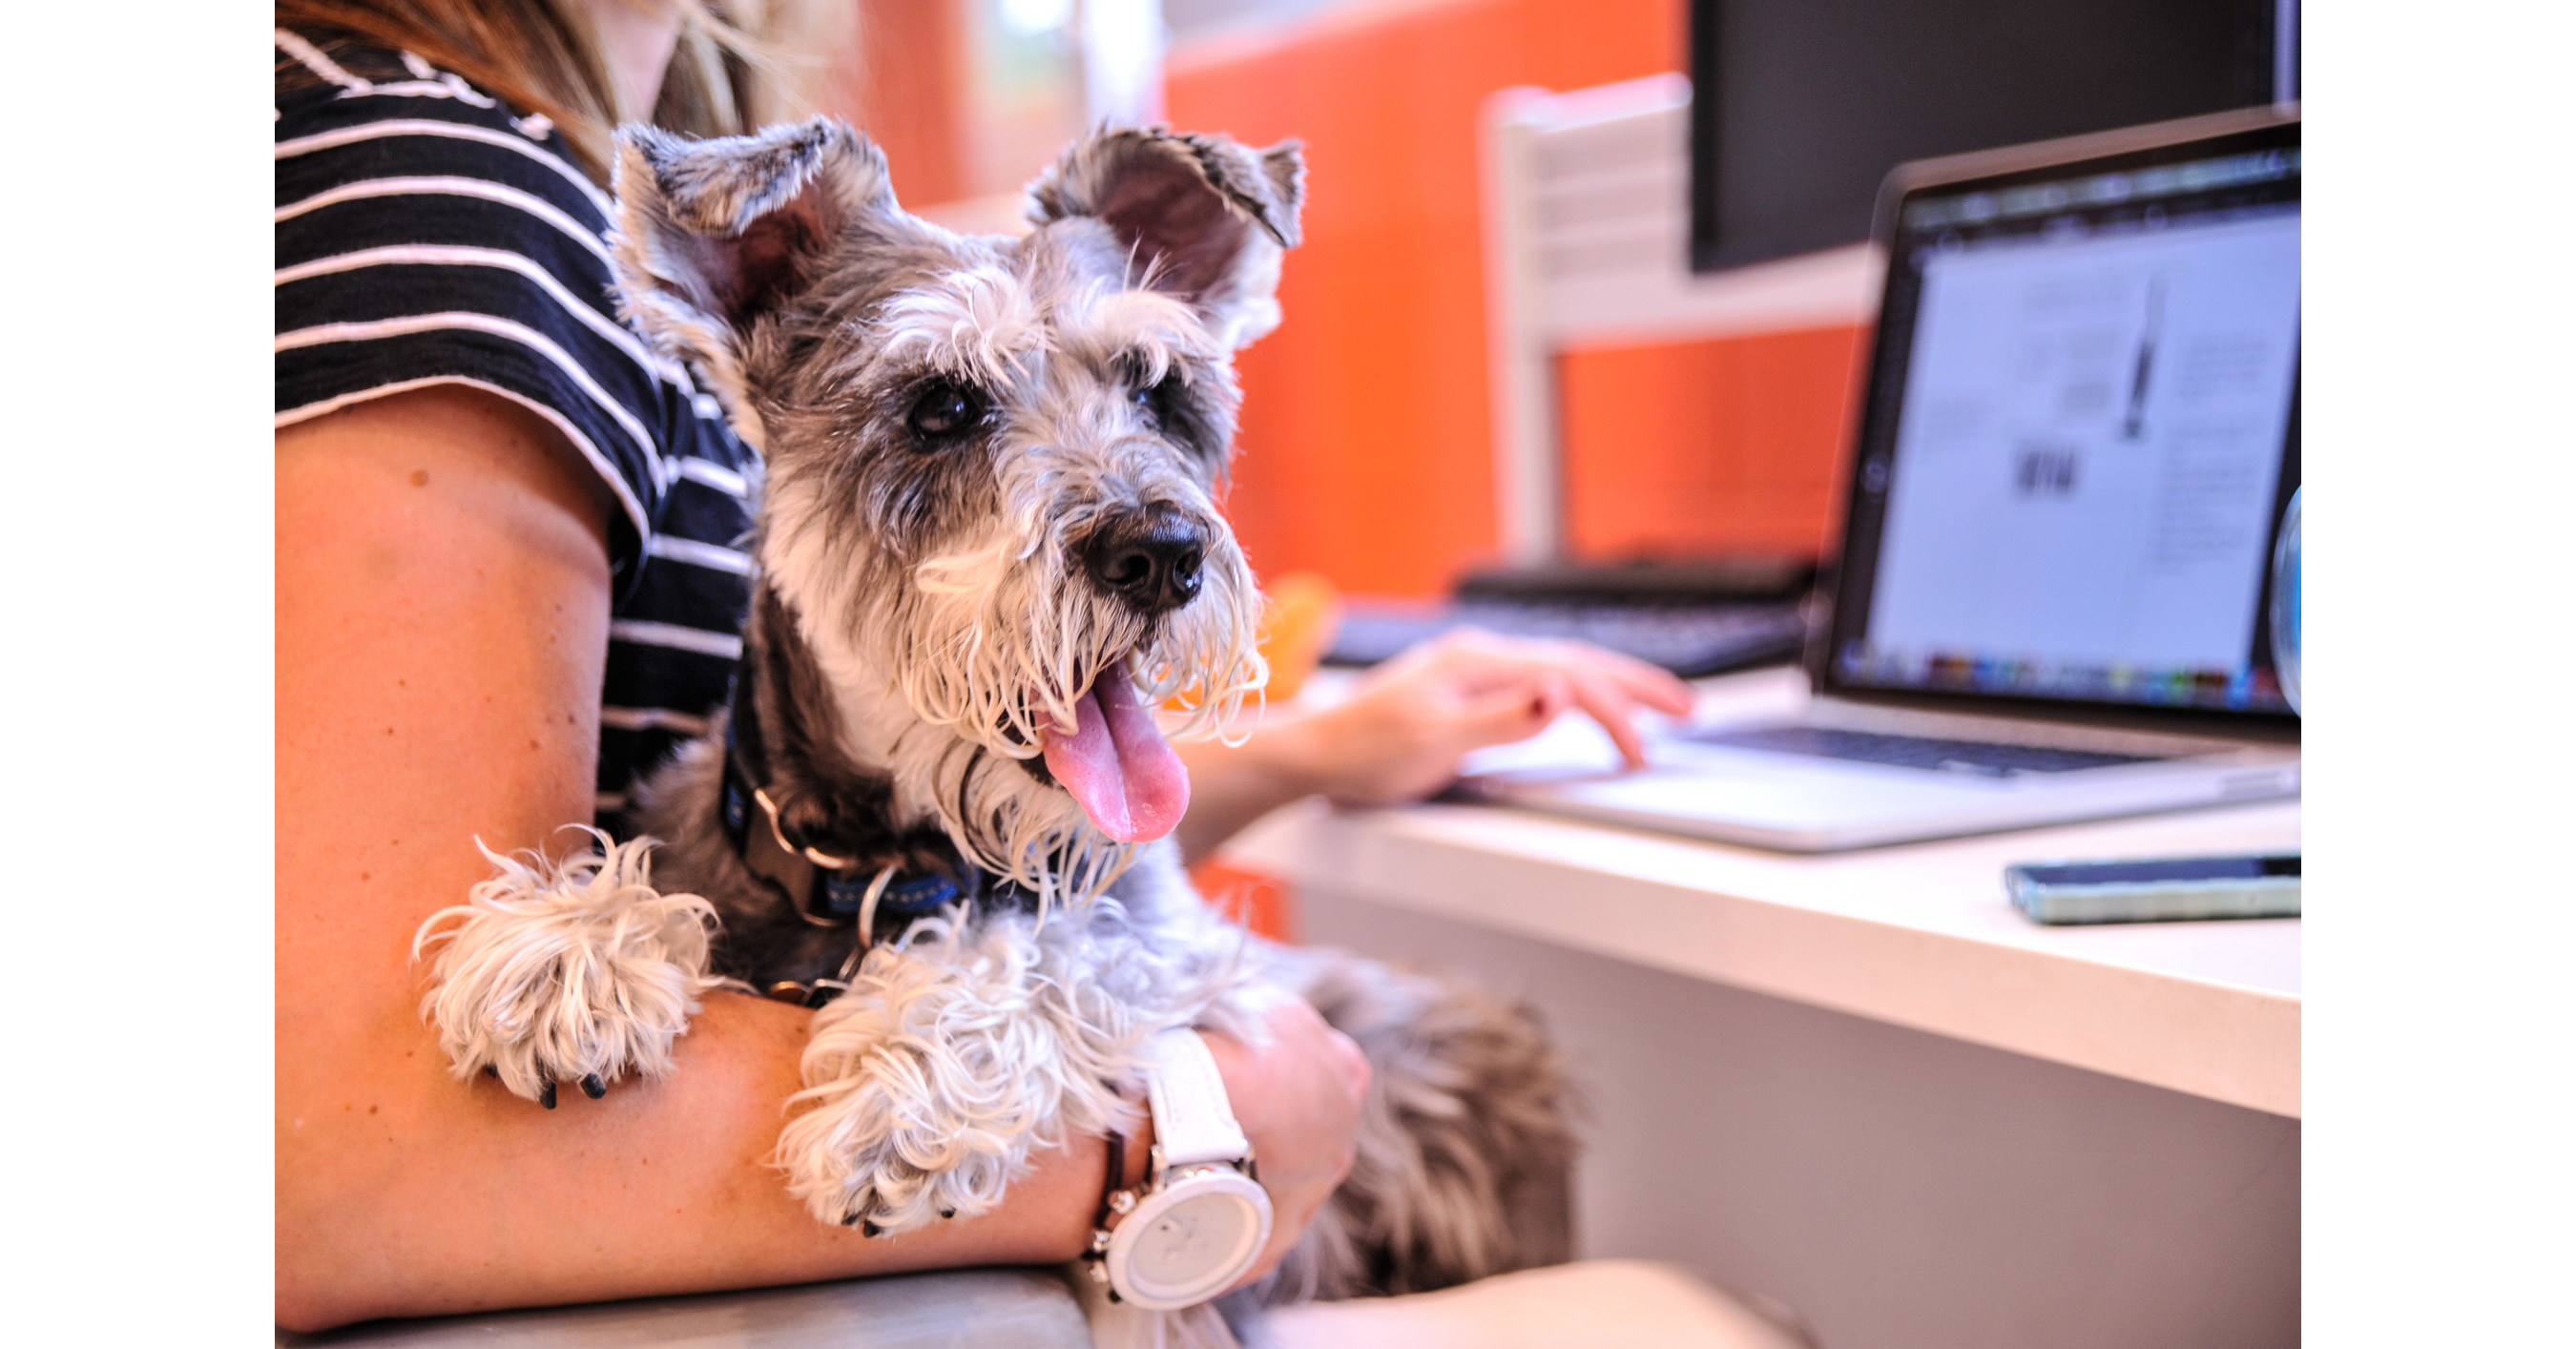 Pet pdf. Pet-friendly офис. Take your Dog to work Day. Фото люди и домашние животные работают. Собака pdf пет френдли офис Марс.